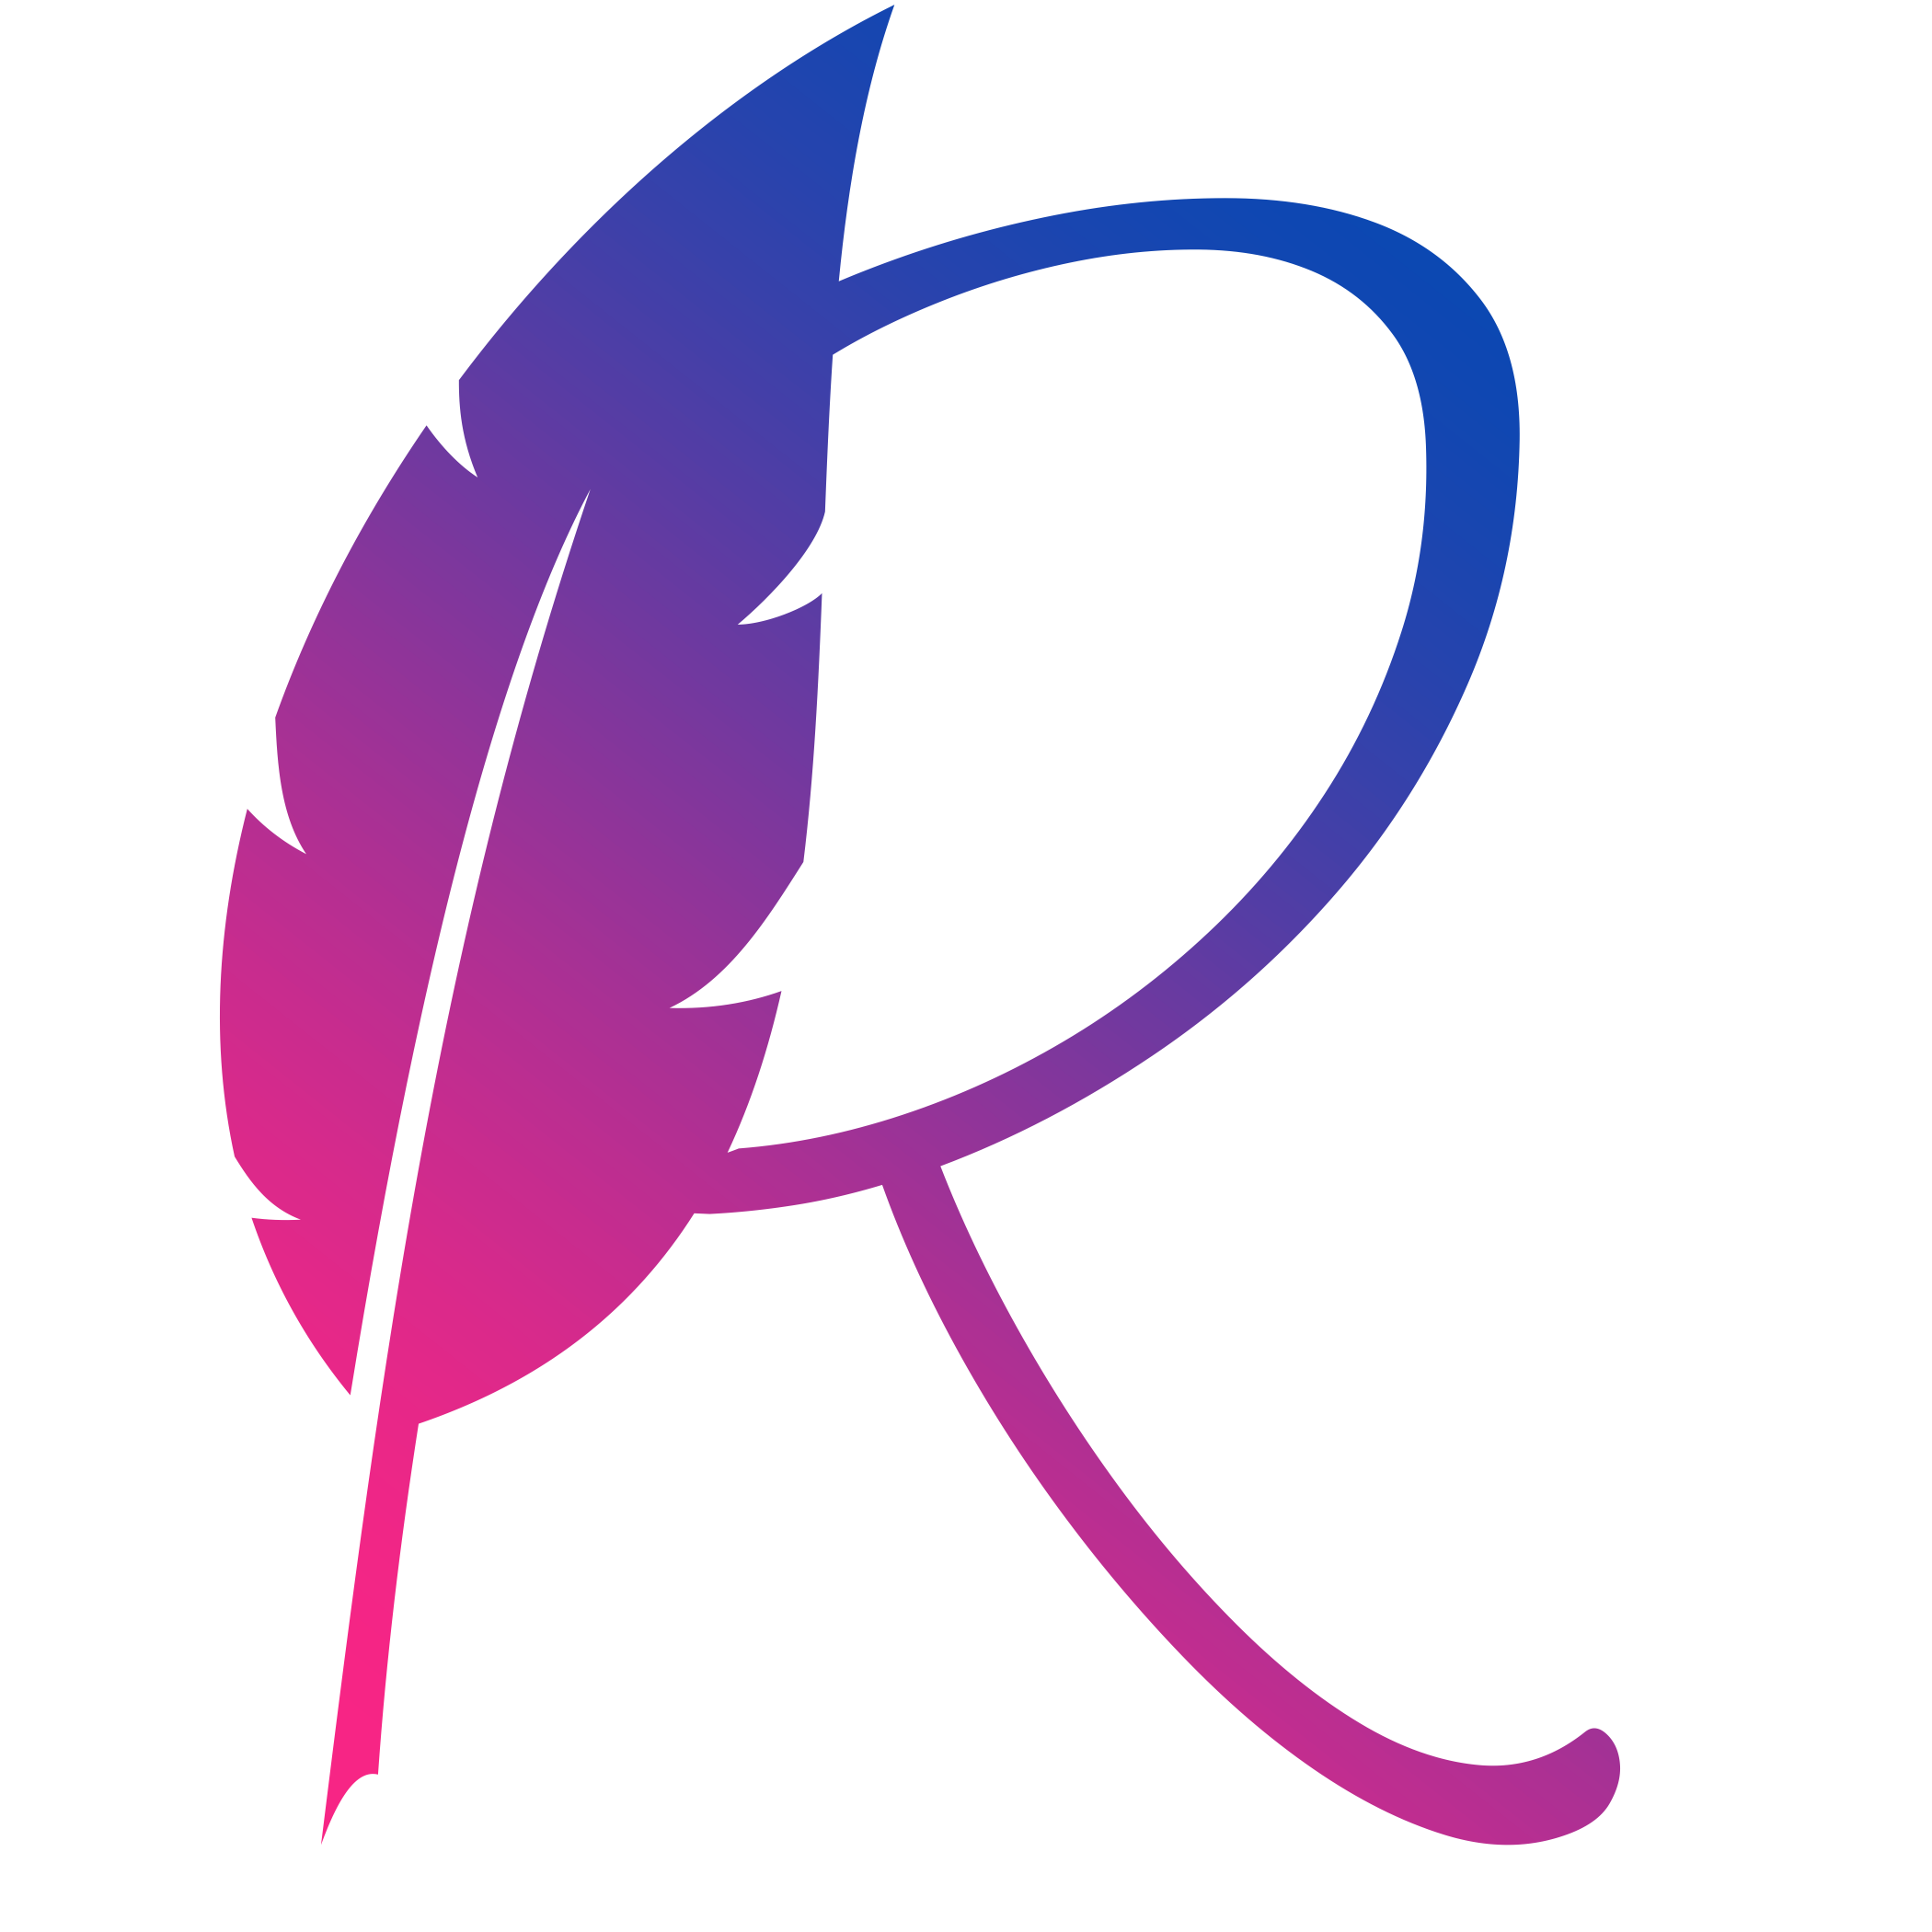 Requstory logo